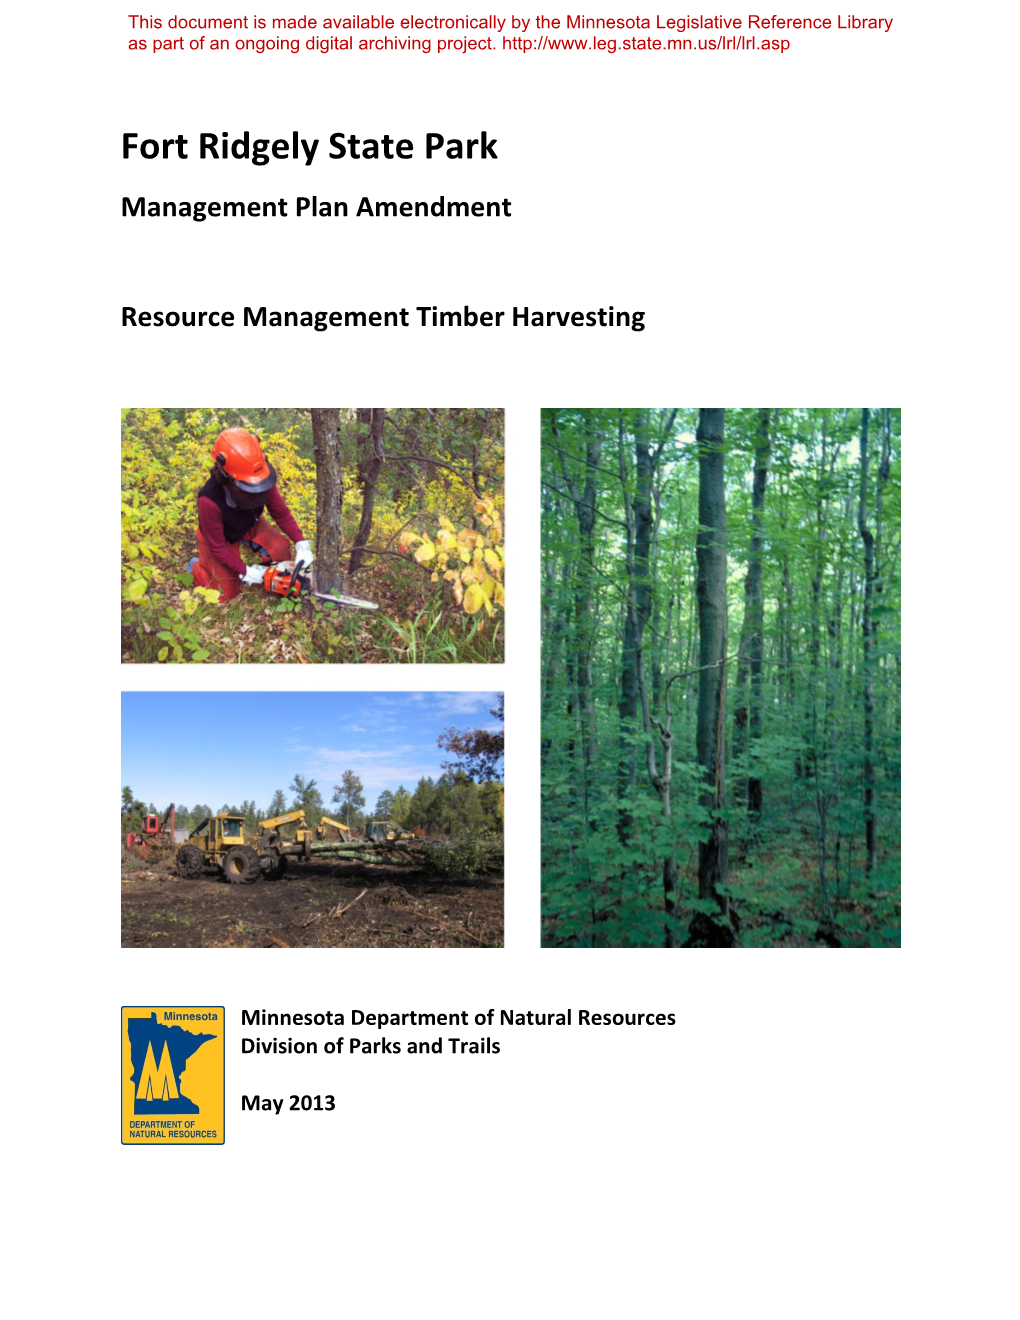 Fort Ridgely State Park Management Plan Amendment Resource